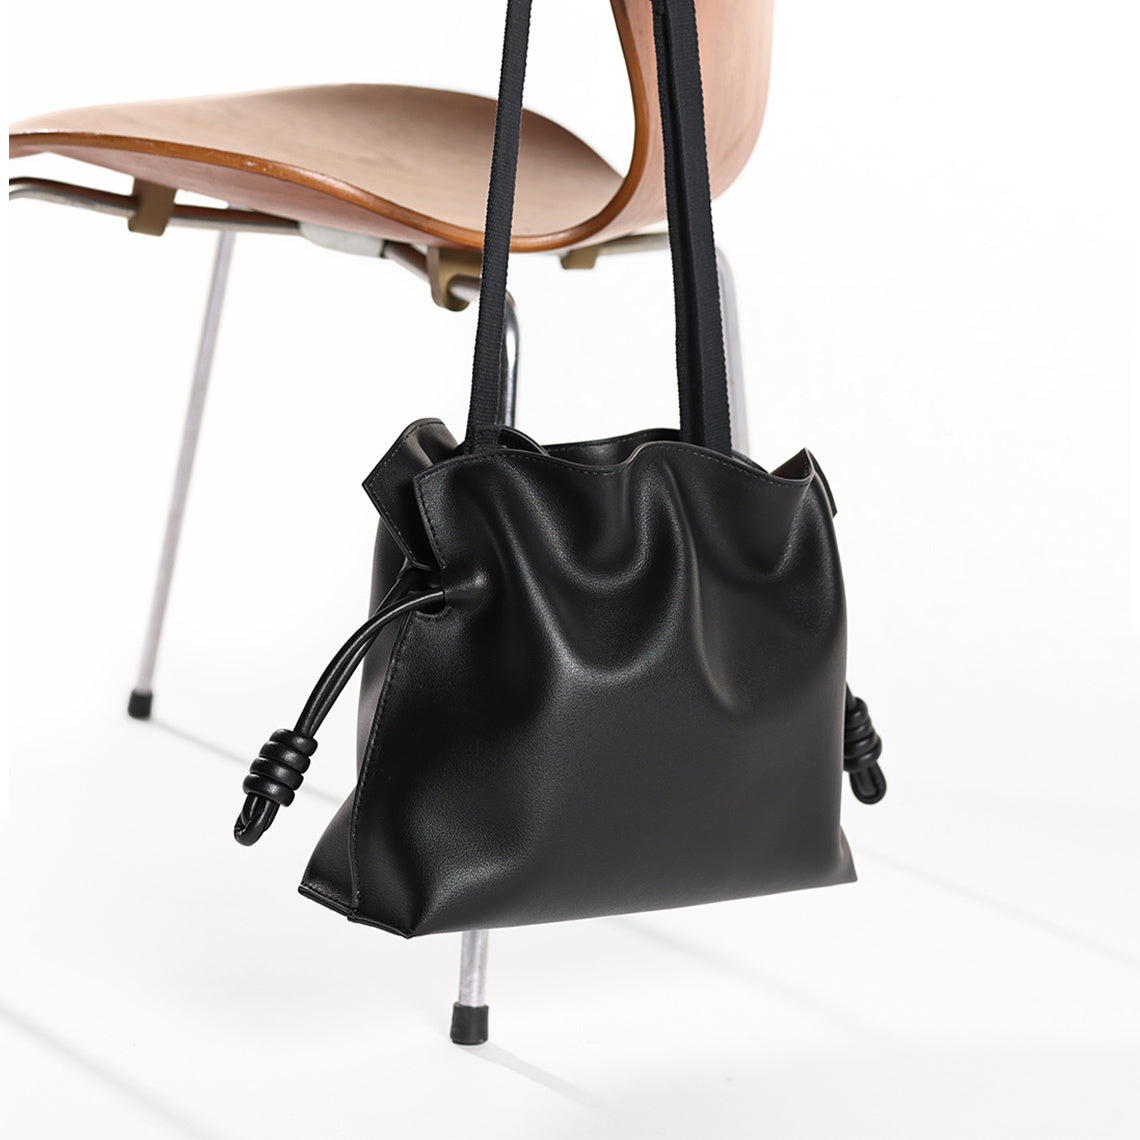 Black Leather Bucket Bag | Handmade Drawstring Bucket Bag for Women - POPSEWING®